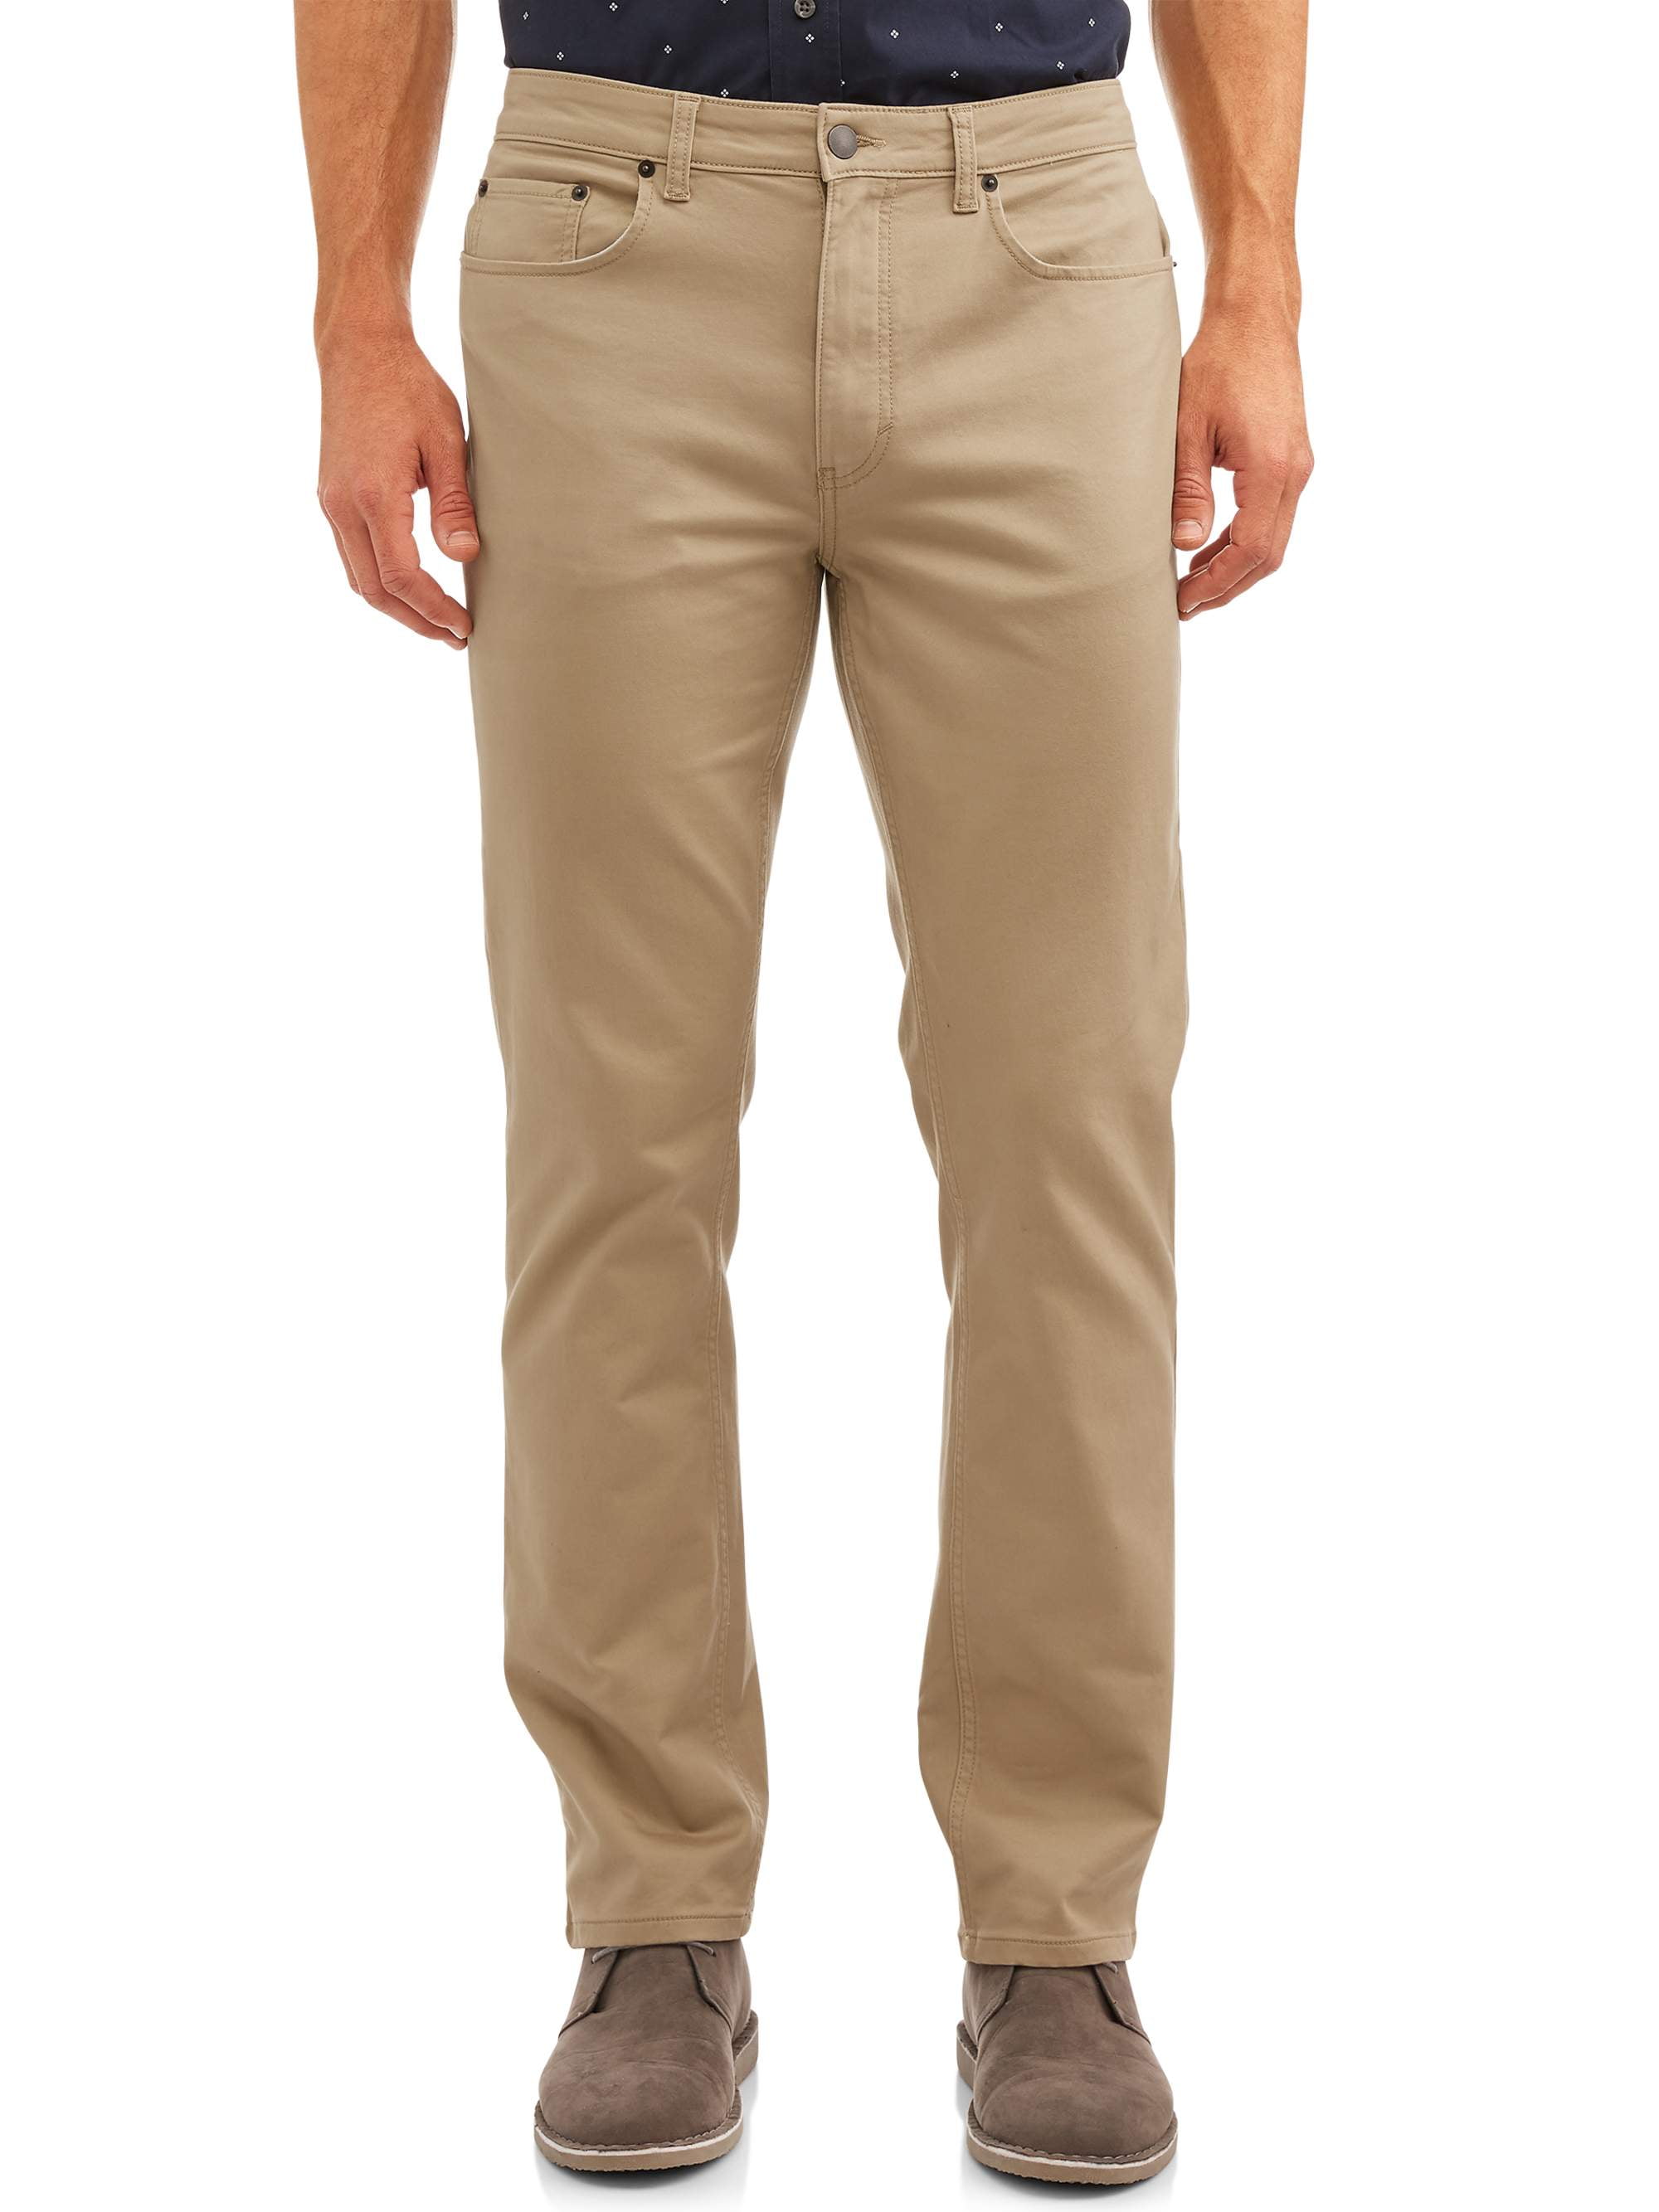 George Men's Premium 5 Pocket Twill Pants - Walmart.com